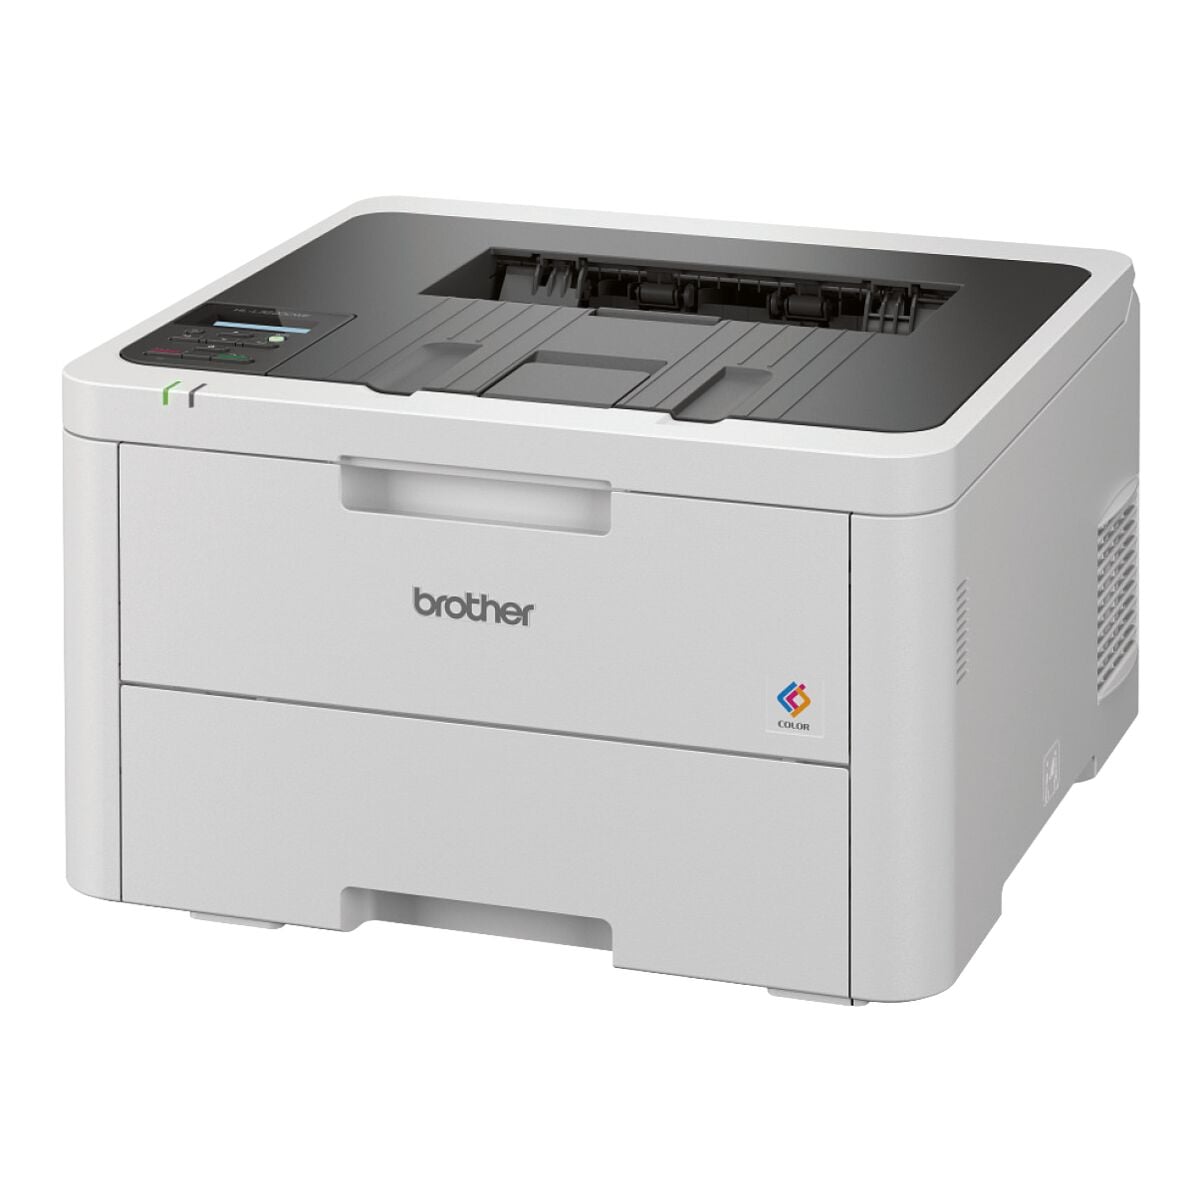 Brother HL-L3220CWE Laserdrucker, A4 Farb-Laserdrucker, 2400 x 600 dpi, mit WLAN